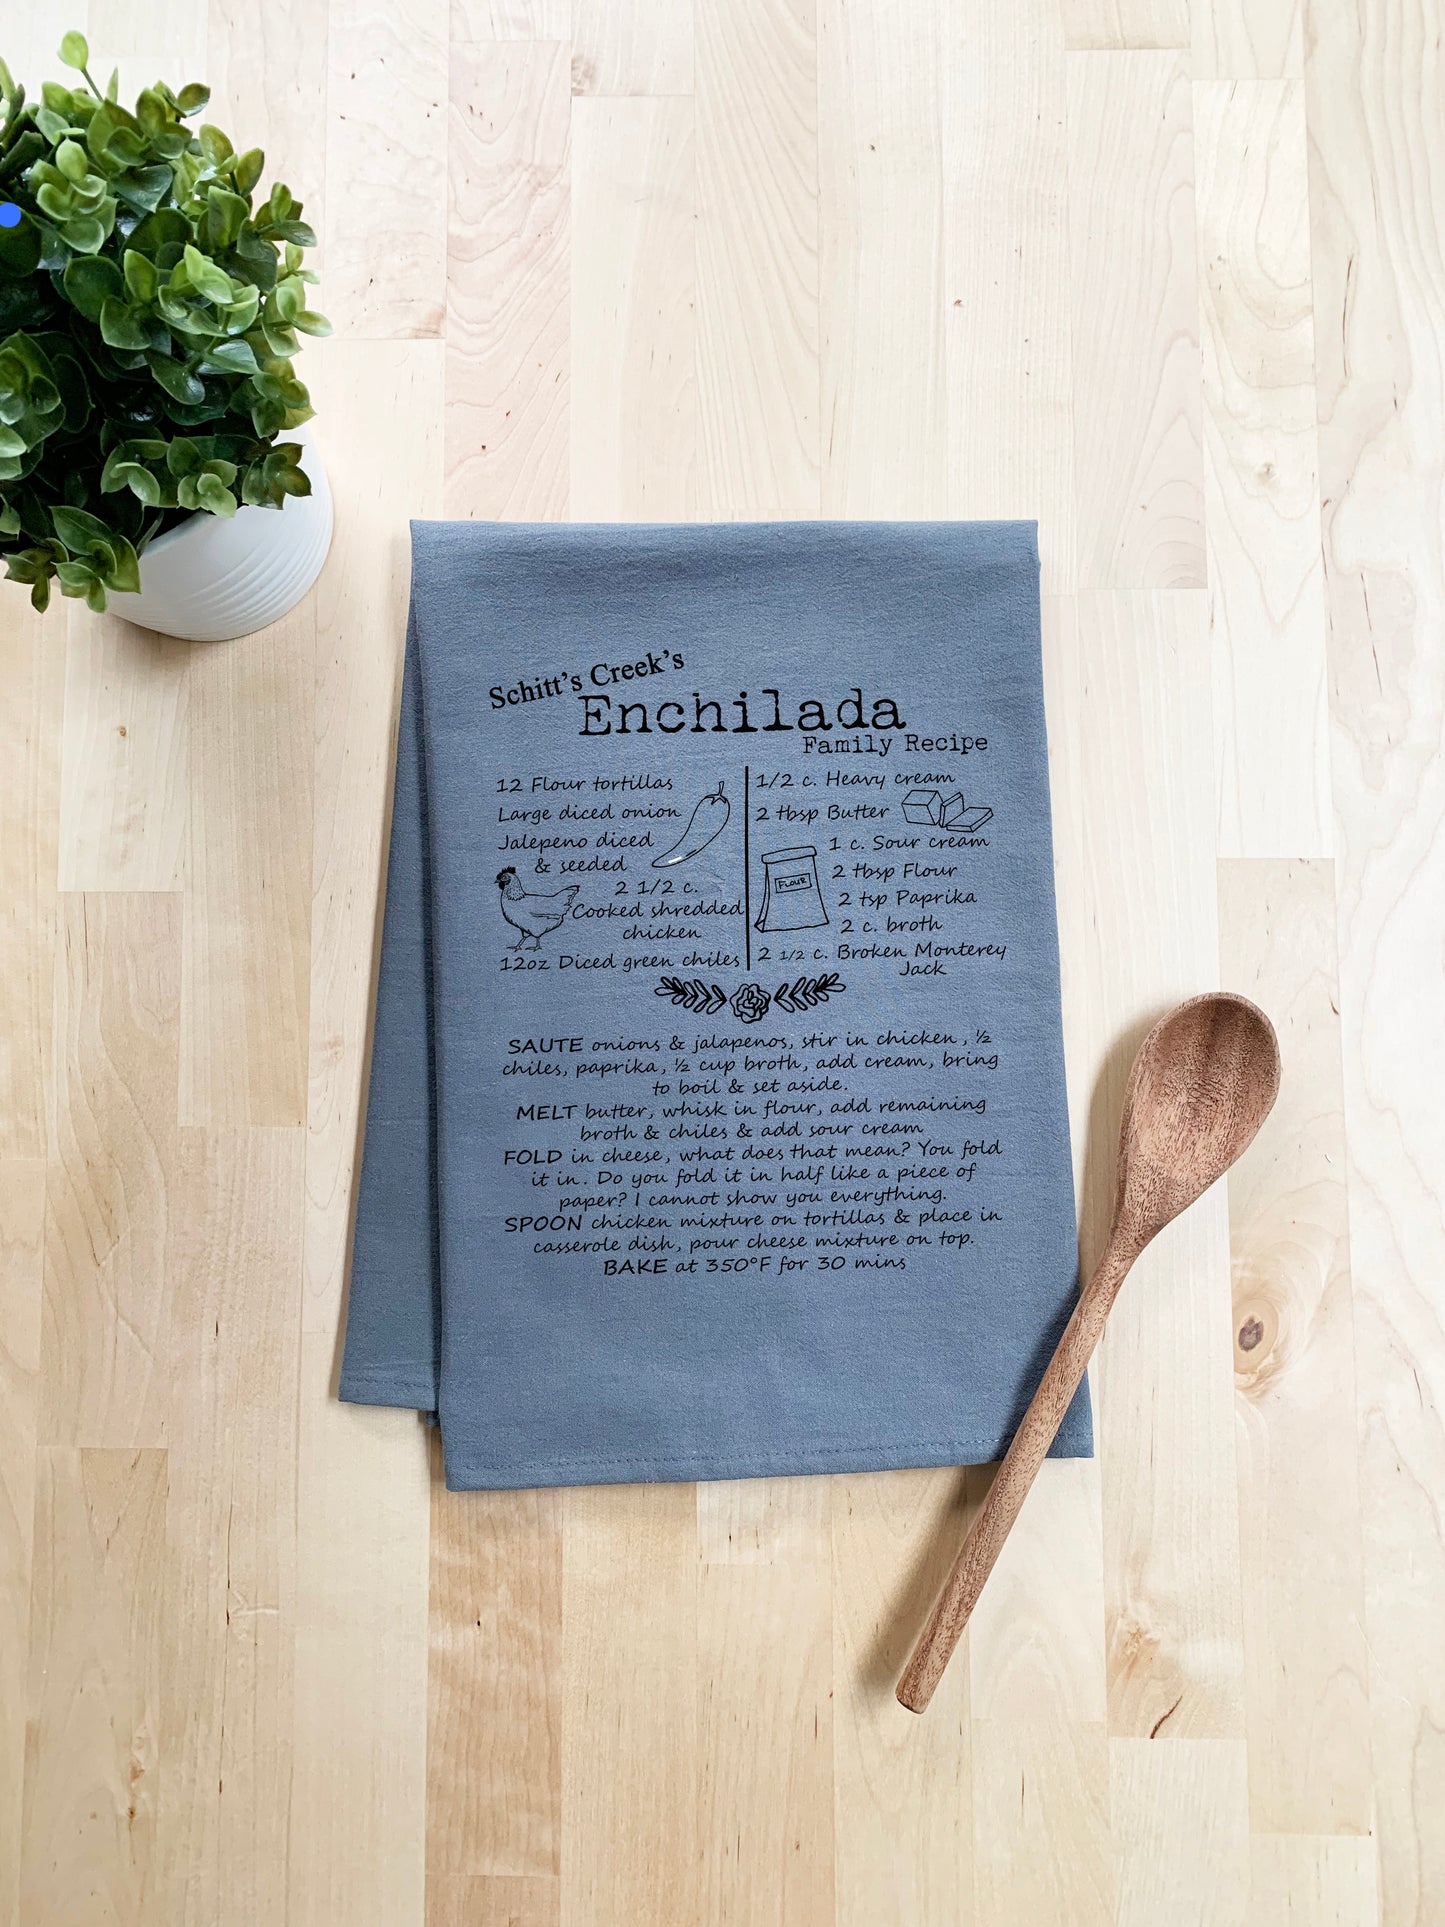 Schitt's Creek Family Enchilada Recipe Dish Towel - White Or Gray